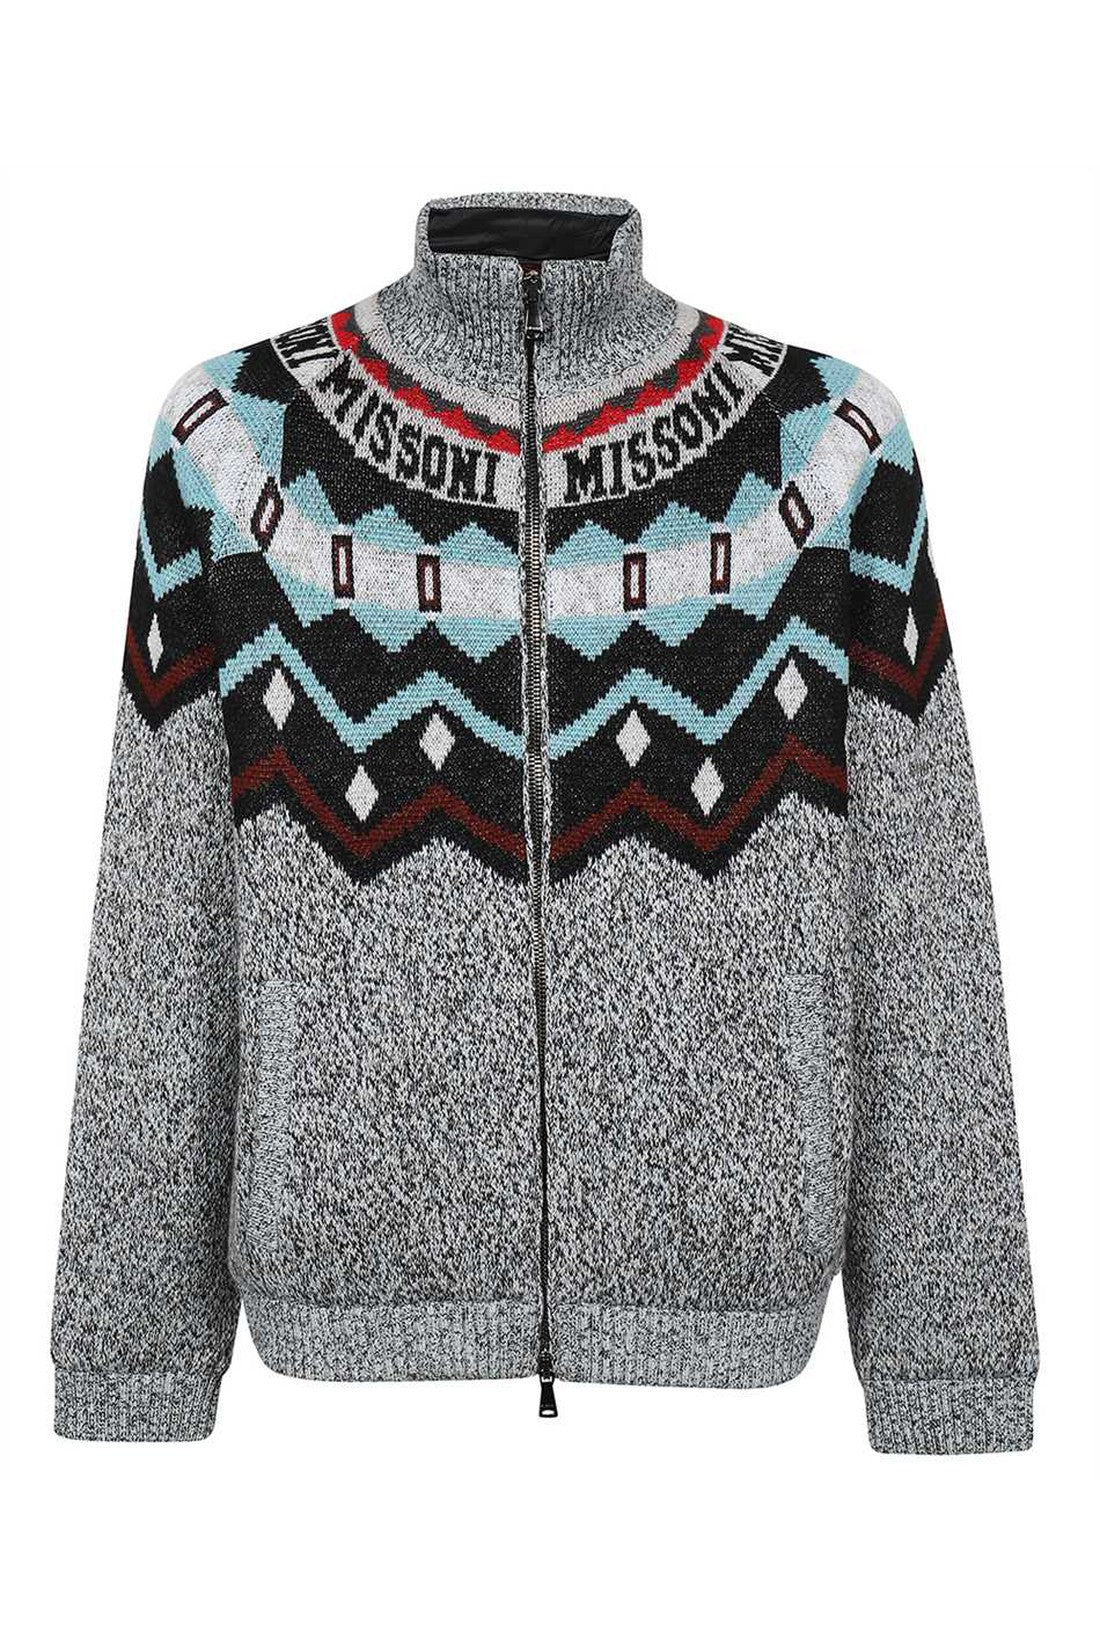 Missoni-OUTLET-SALE-Wool-knit-jacket-Jacken-Mantel-50-ARCHIVE-COLLECTION.jpg